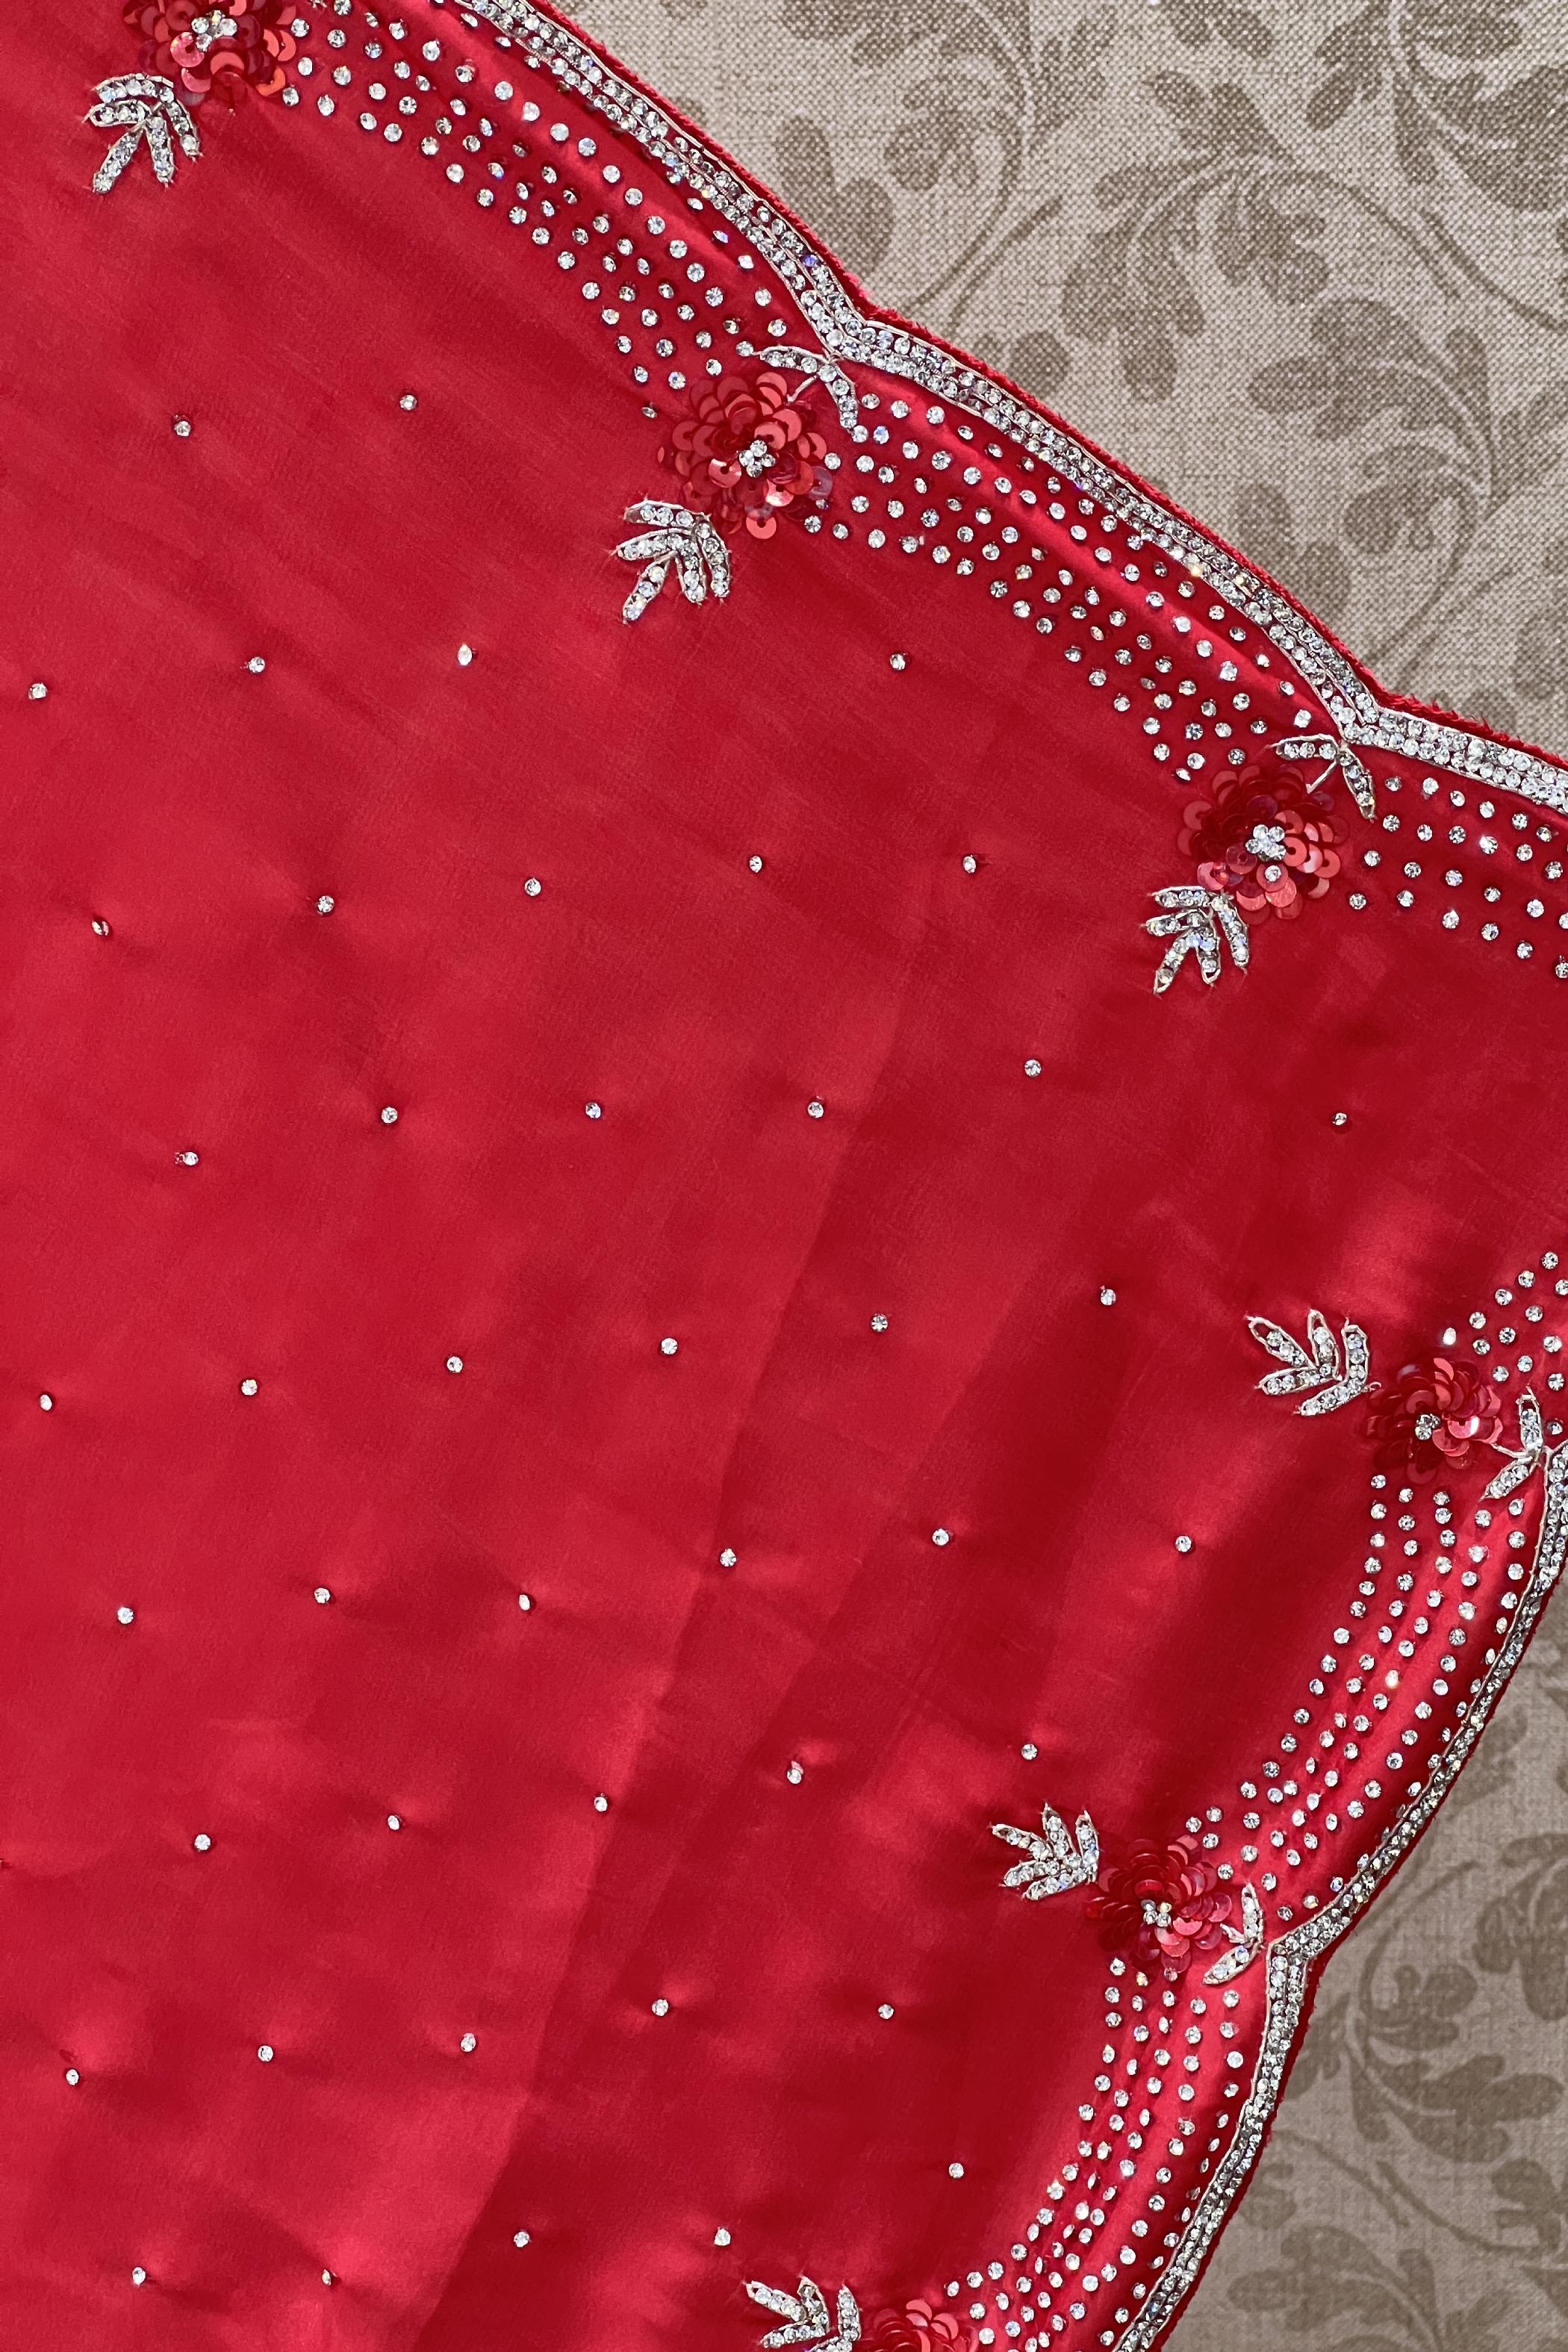 Heavy Nylon Mono Net saree with 16000+ Ceramic stones and diamonds. |  Bollywood designer sarees, Saree designs, Net saree